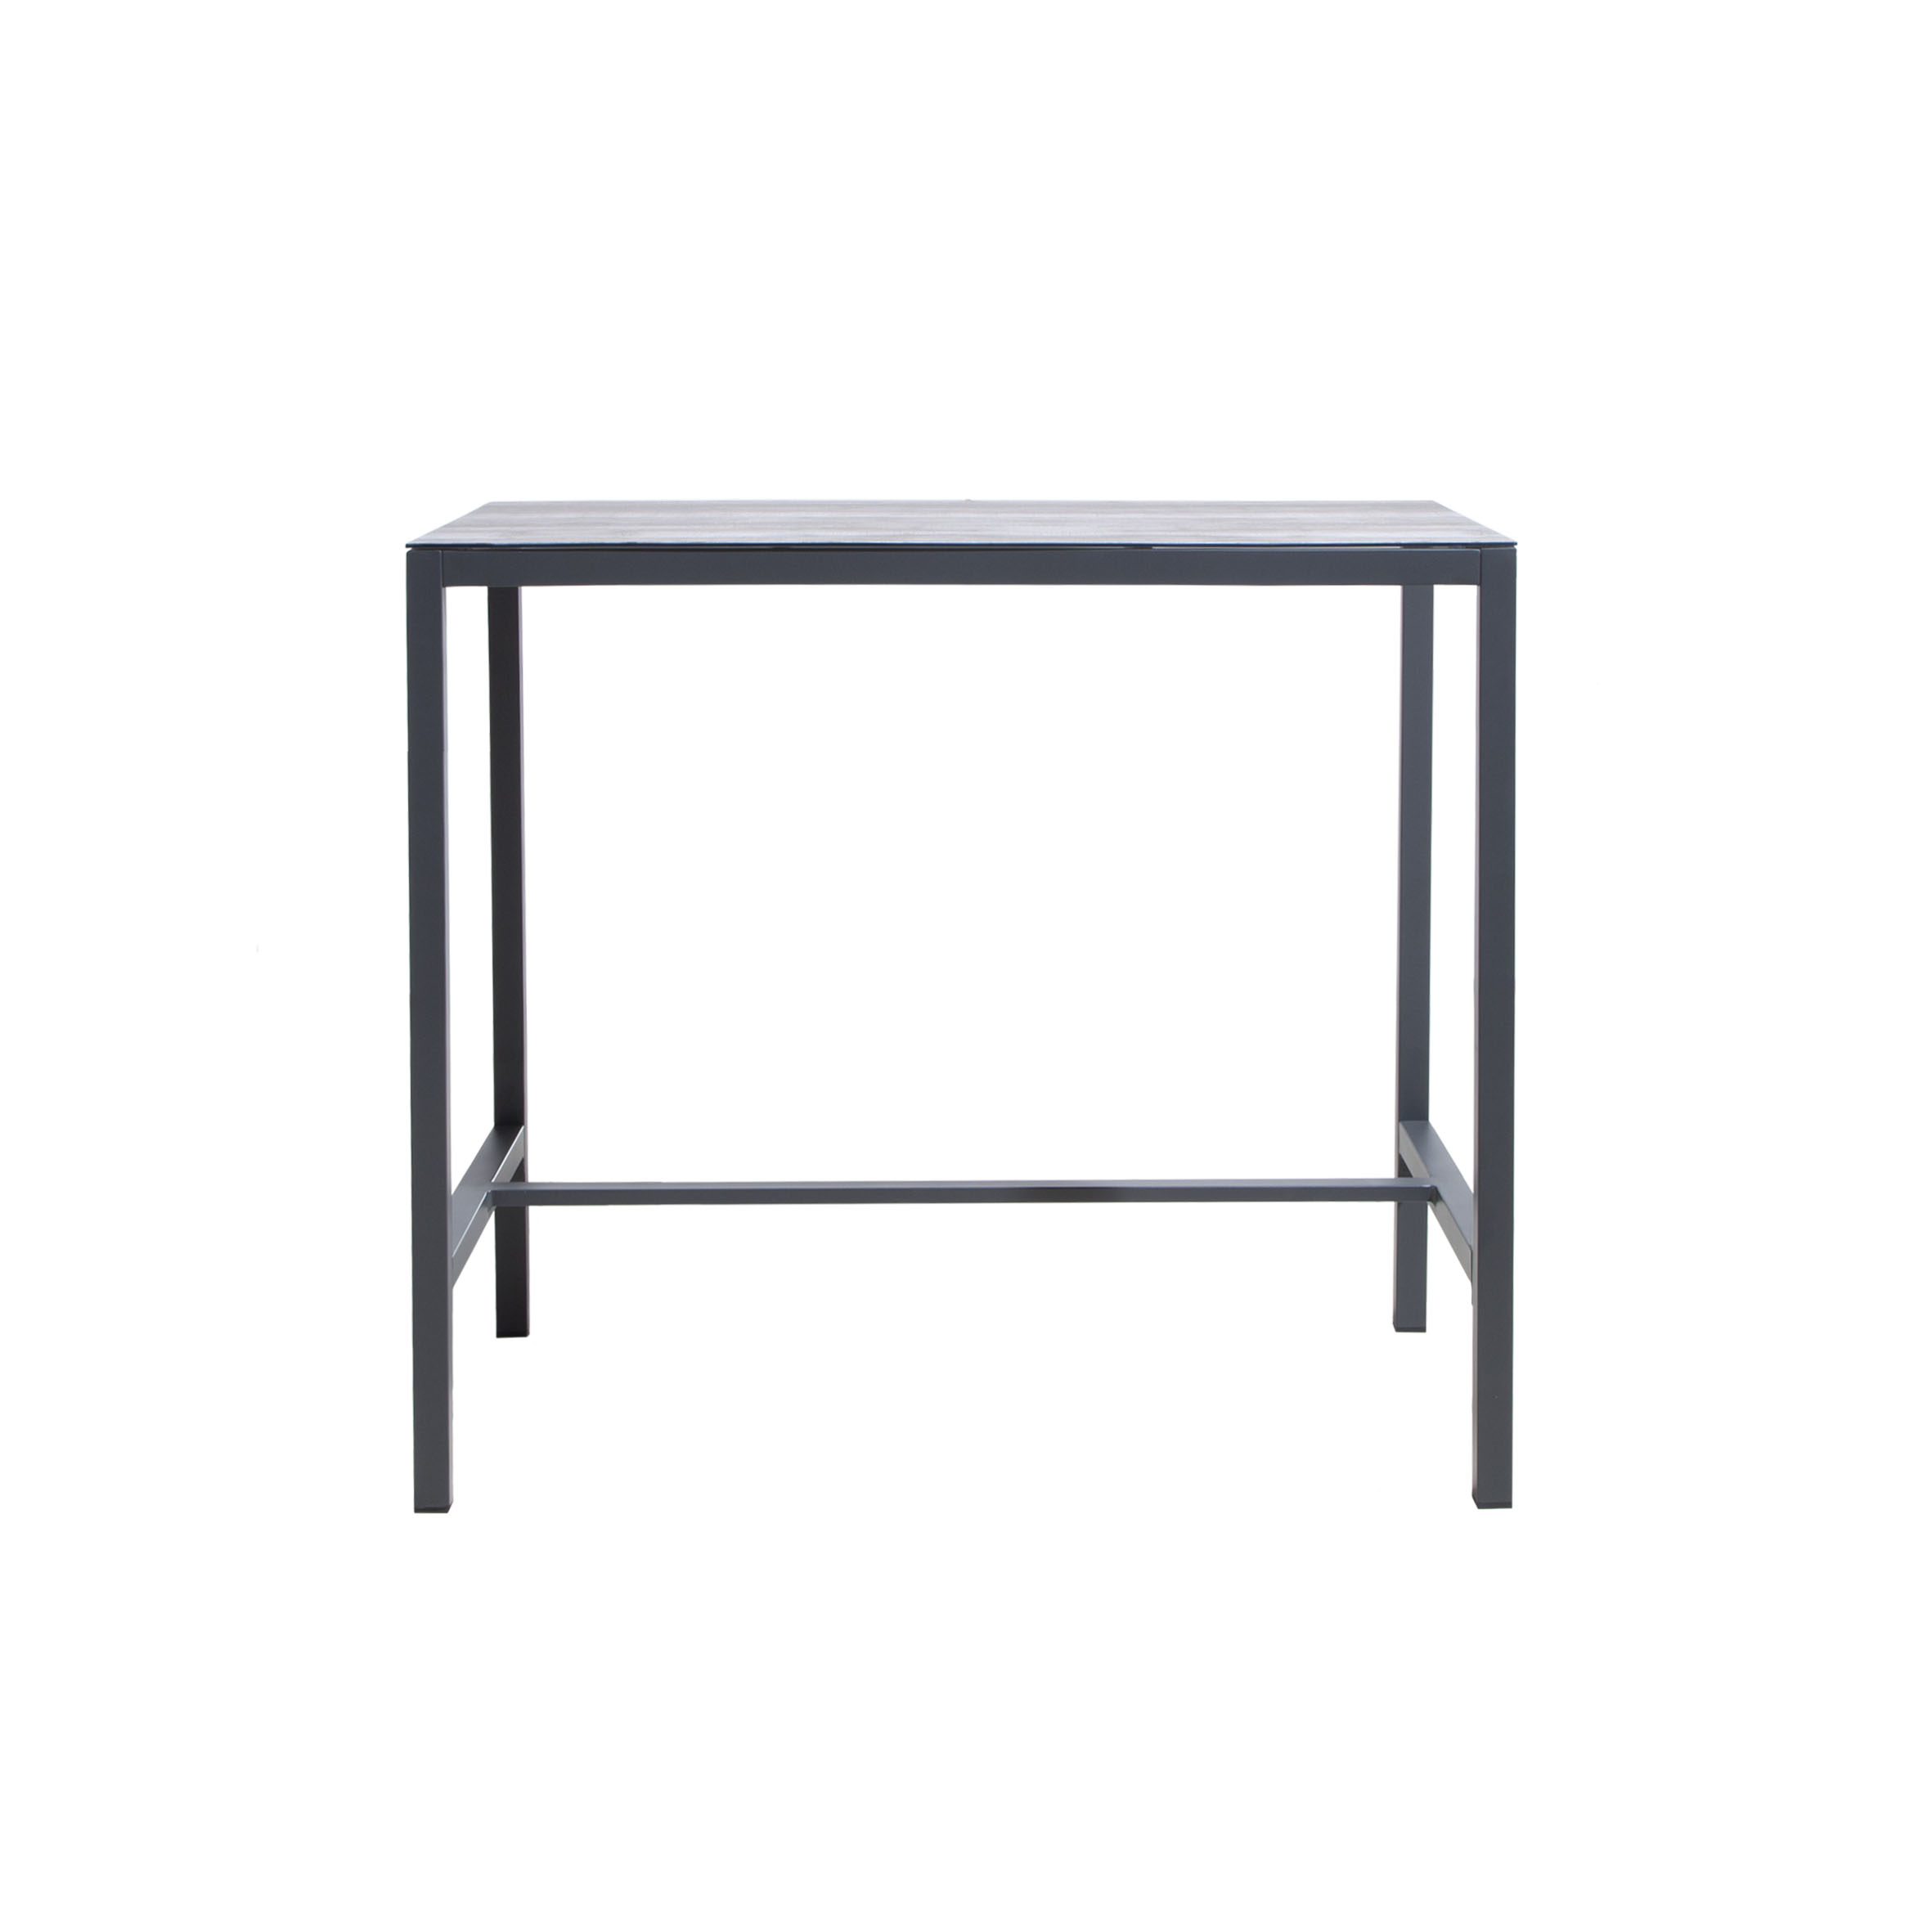 Season alu. bar table (Ceramic table) S2